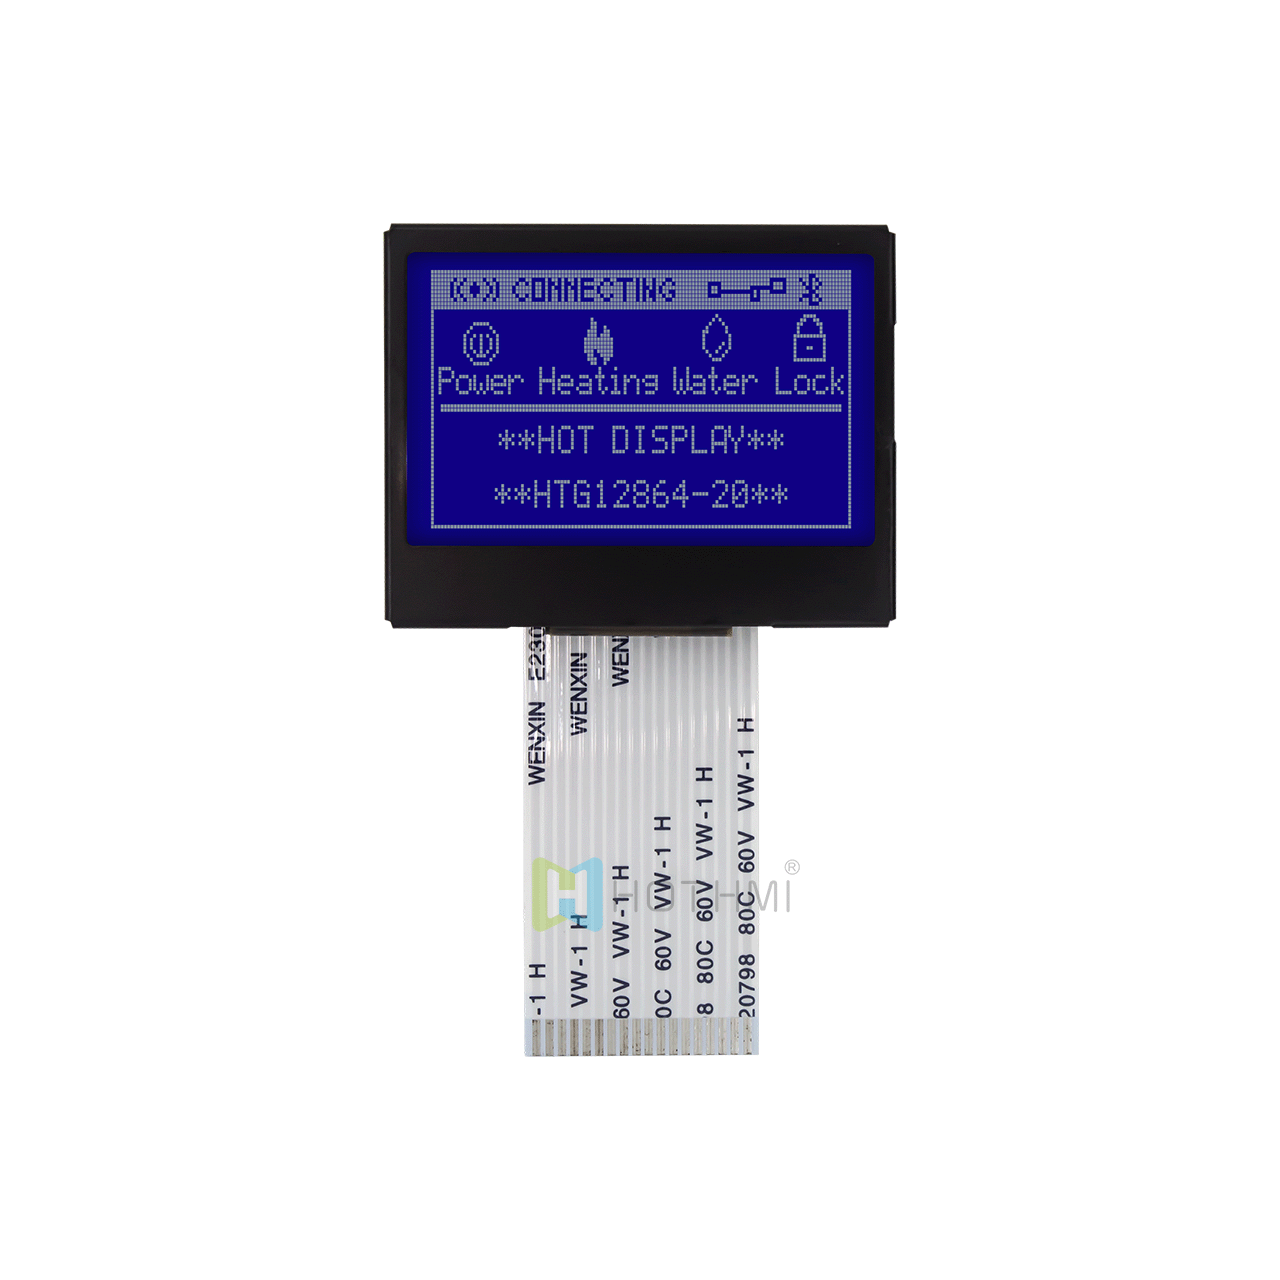 1.7-inch graphic dot matrix module/128x64 resolution/white text on blue background/ST7565R control chip/MCU